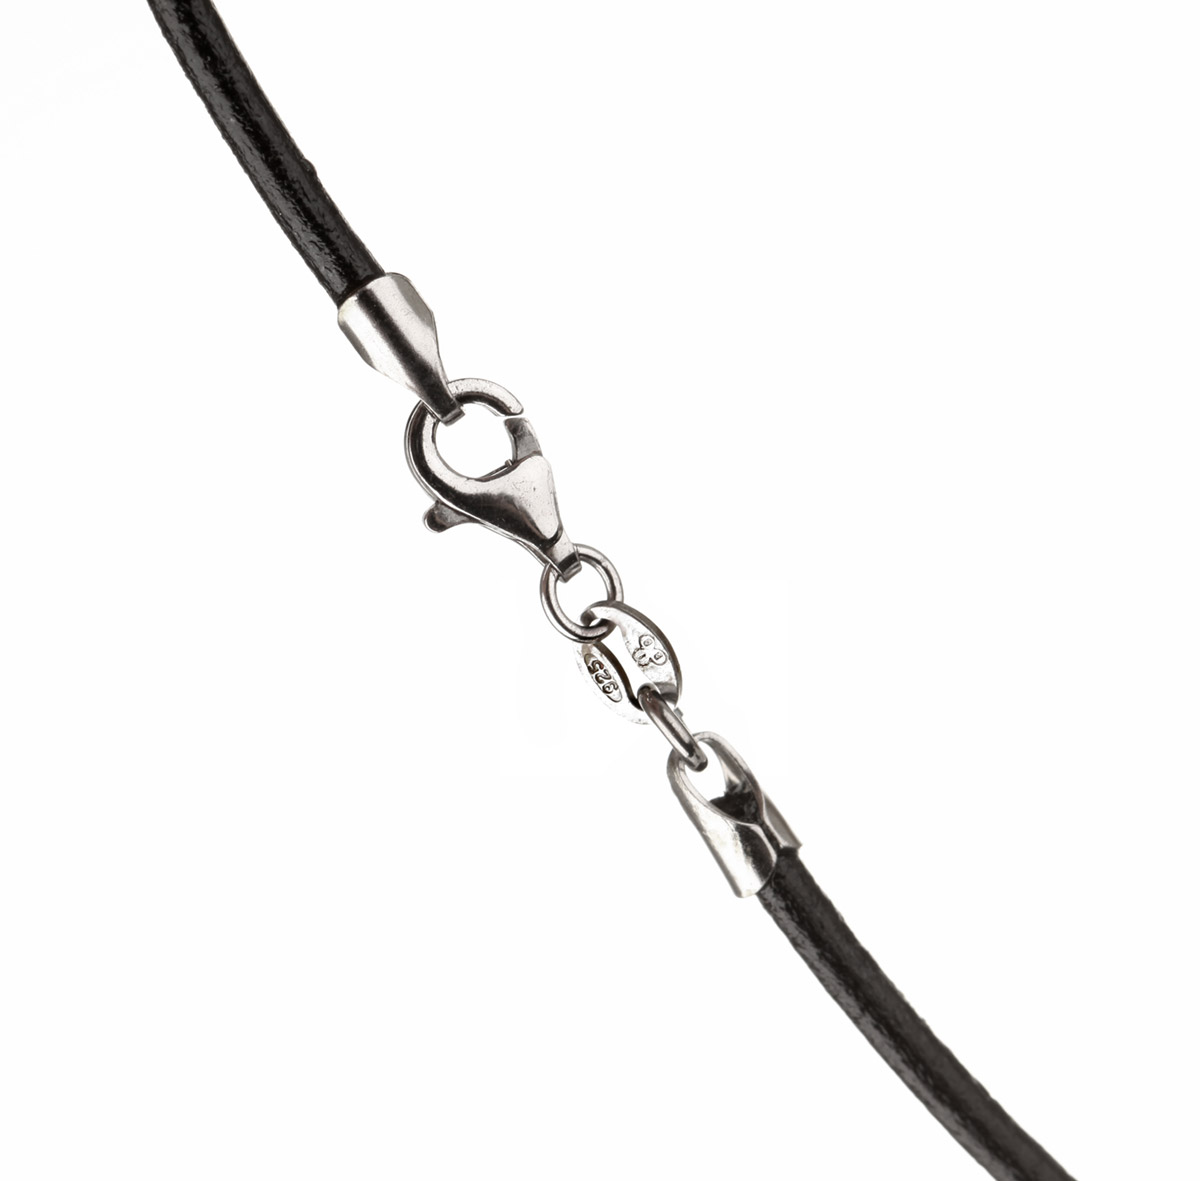 Drei Nornen Halsband - Leder & Sterling Silber Made in Shetland